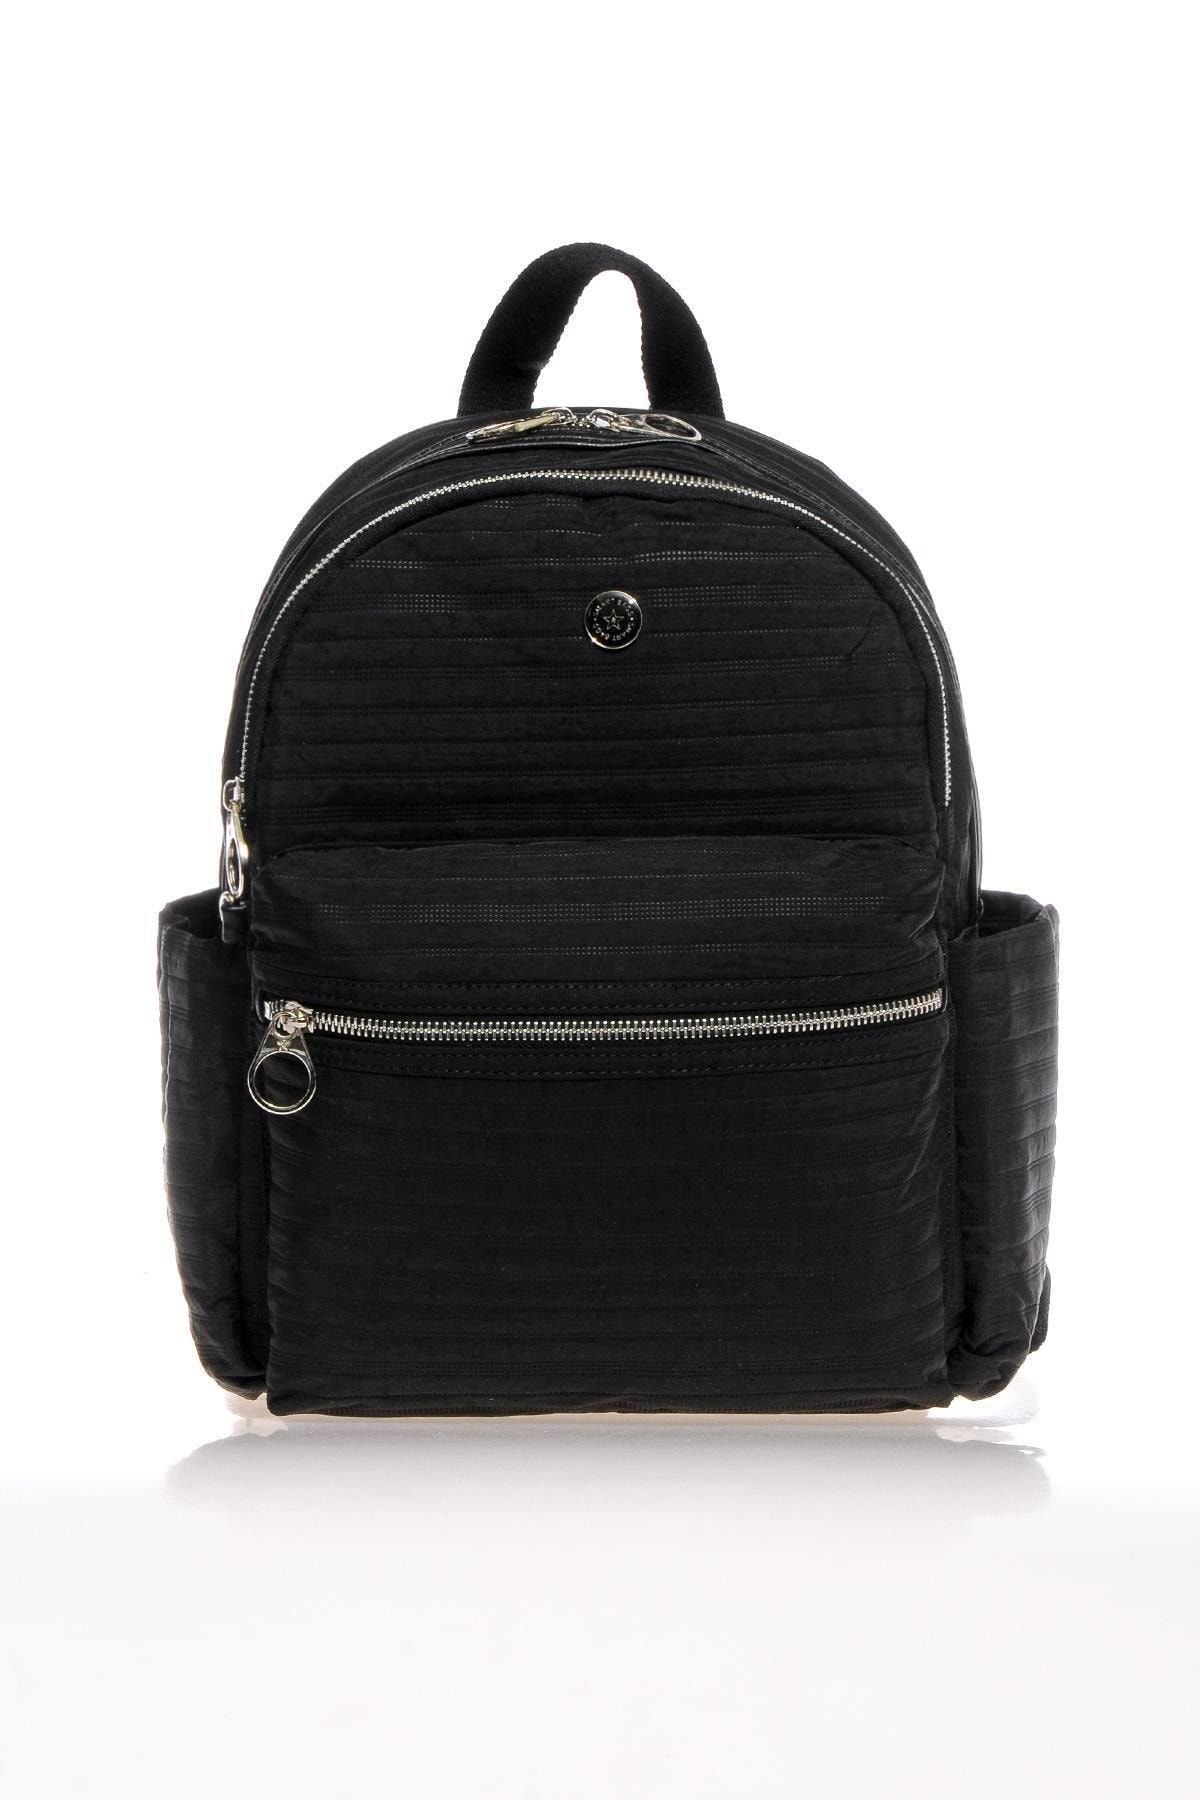 Smart Bags Smb3023-0001 Siyah Kadın Sırt Çantası